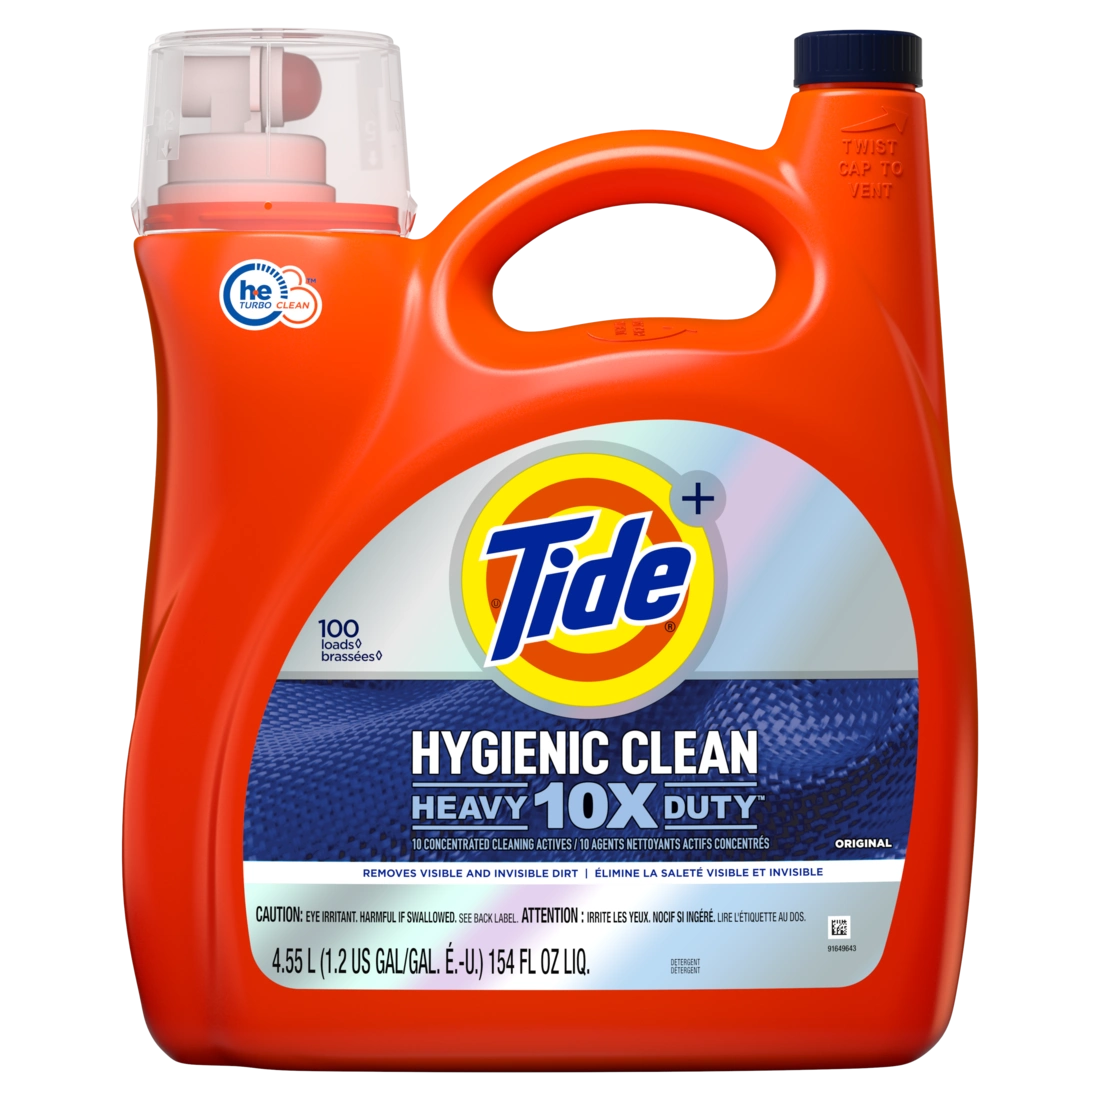 Hygienic Clean Original product hero image